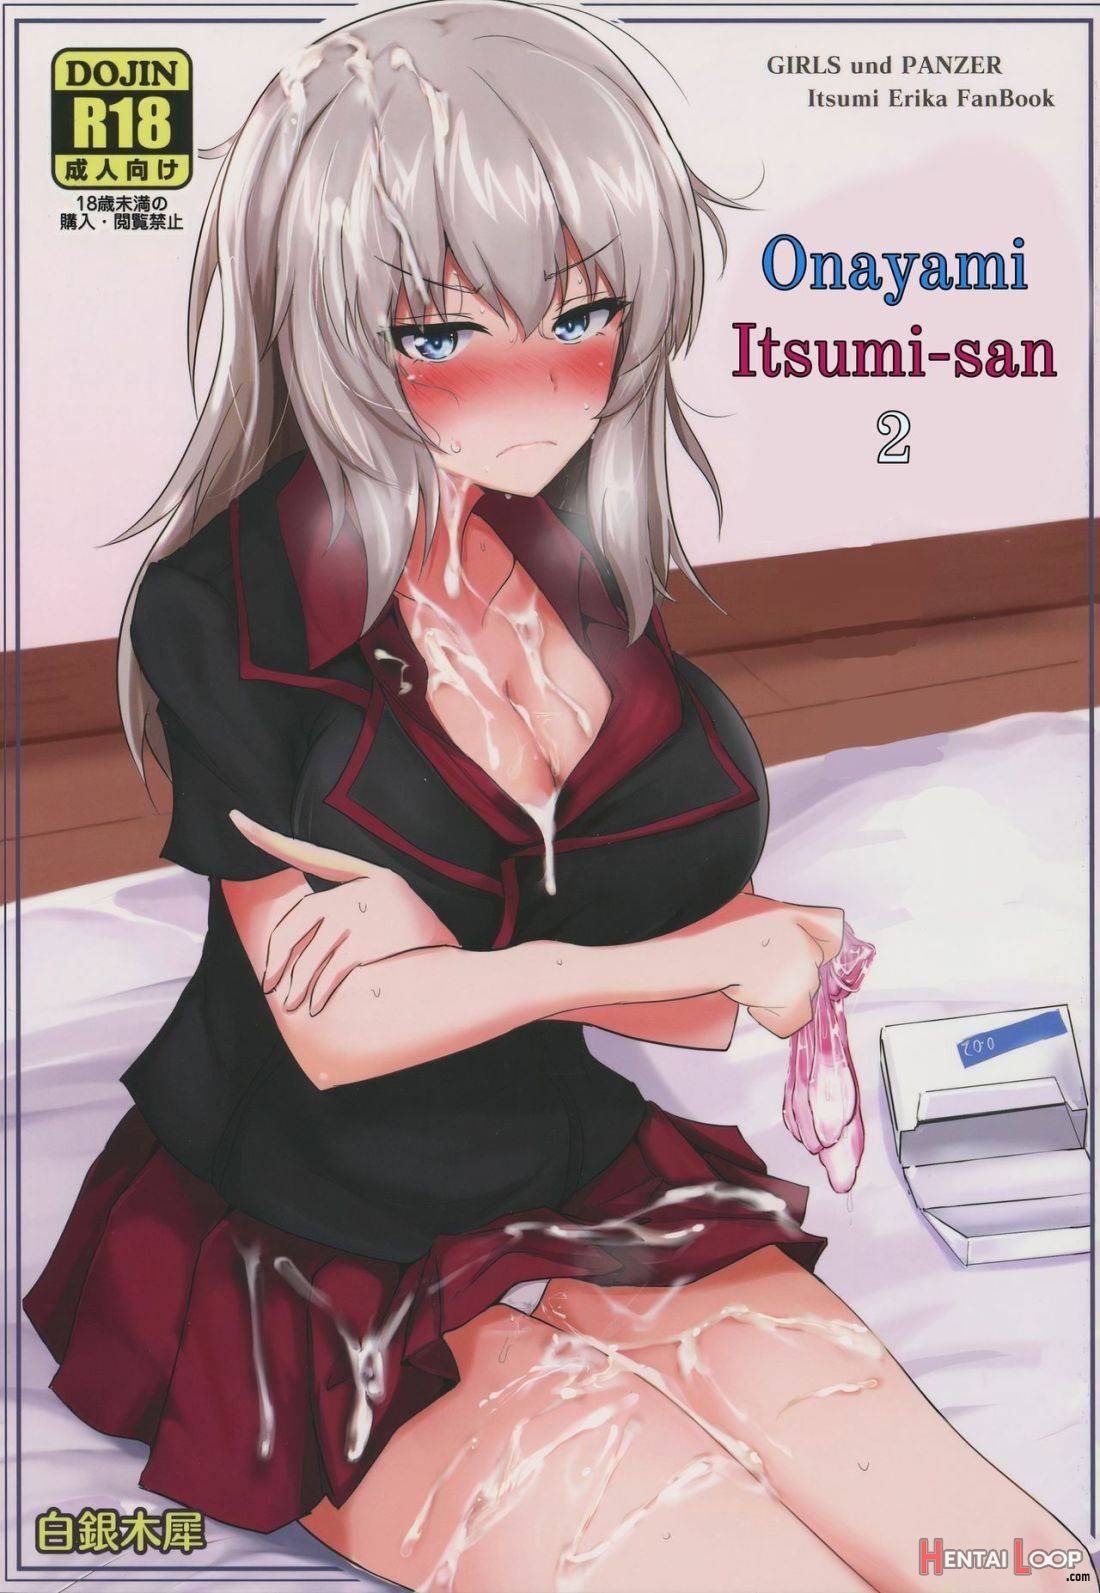 Onayami Itsumi-san 2 page 1